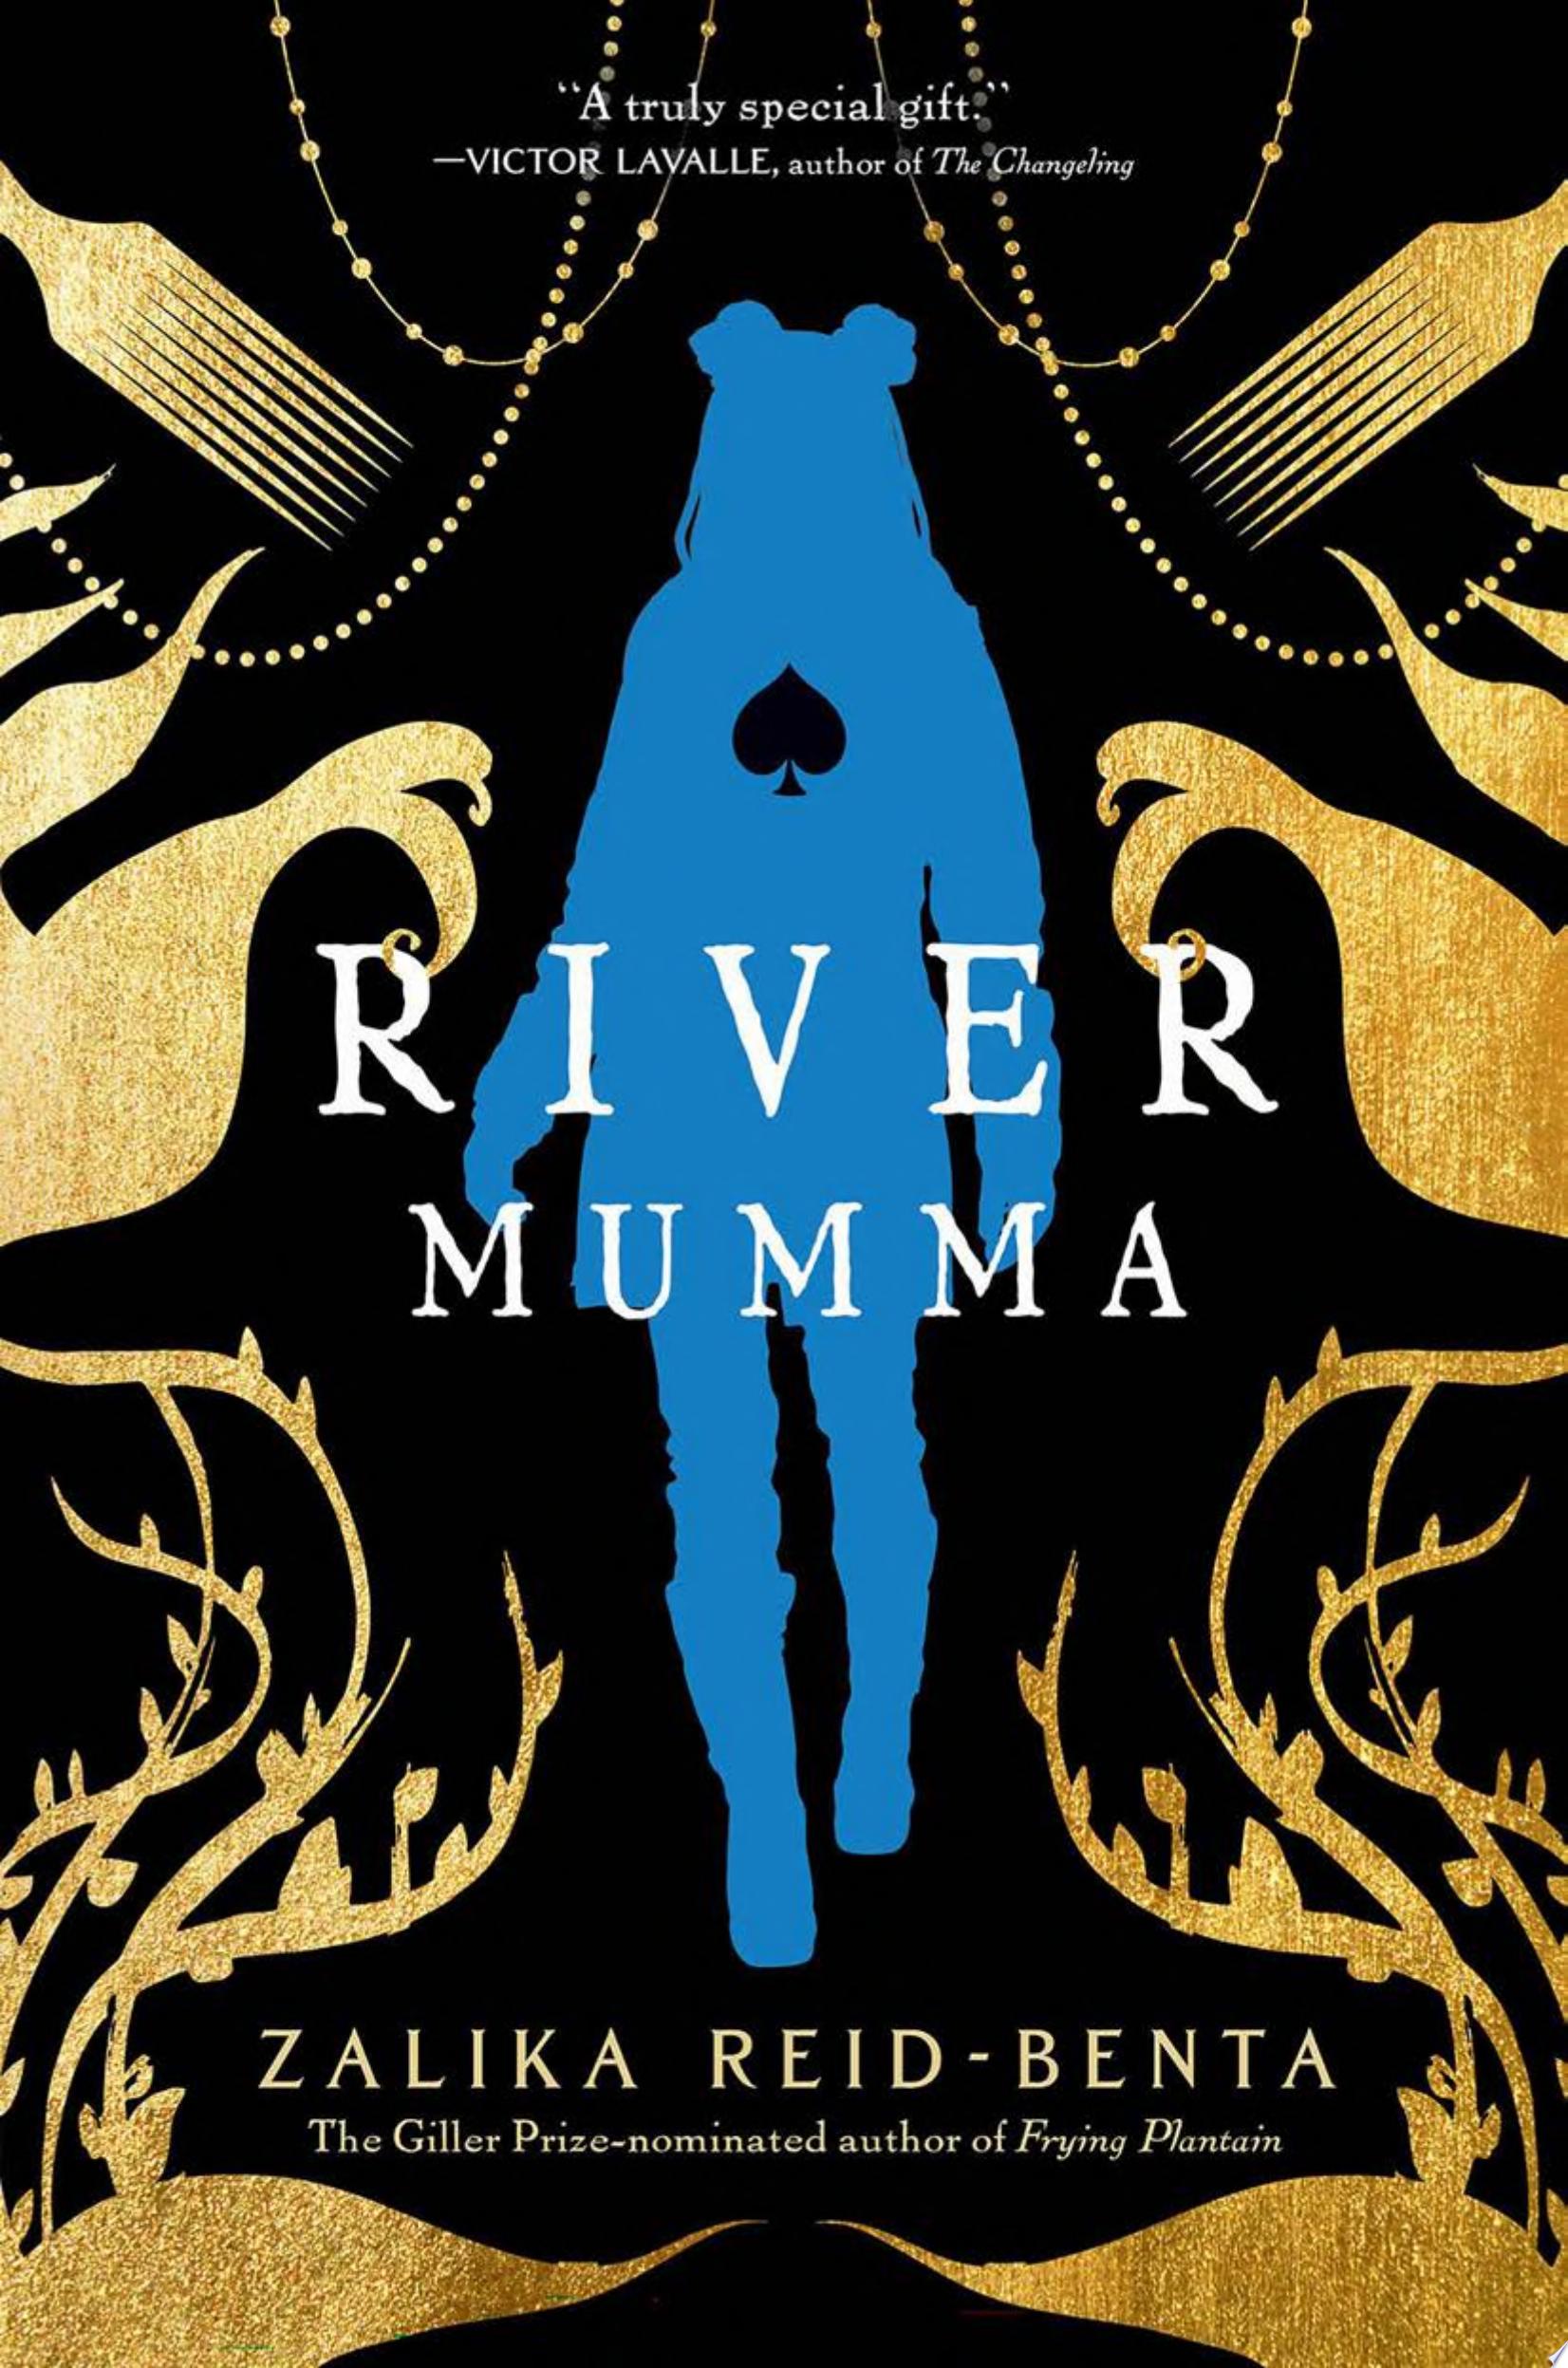 Image for "River Mumma"